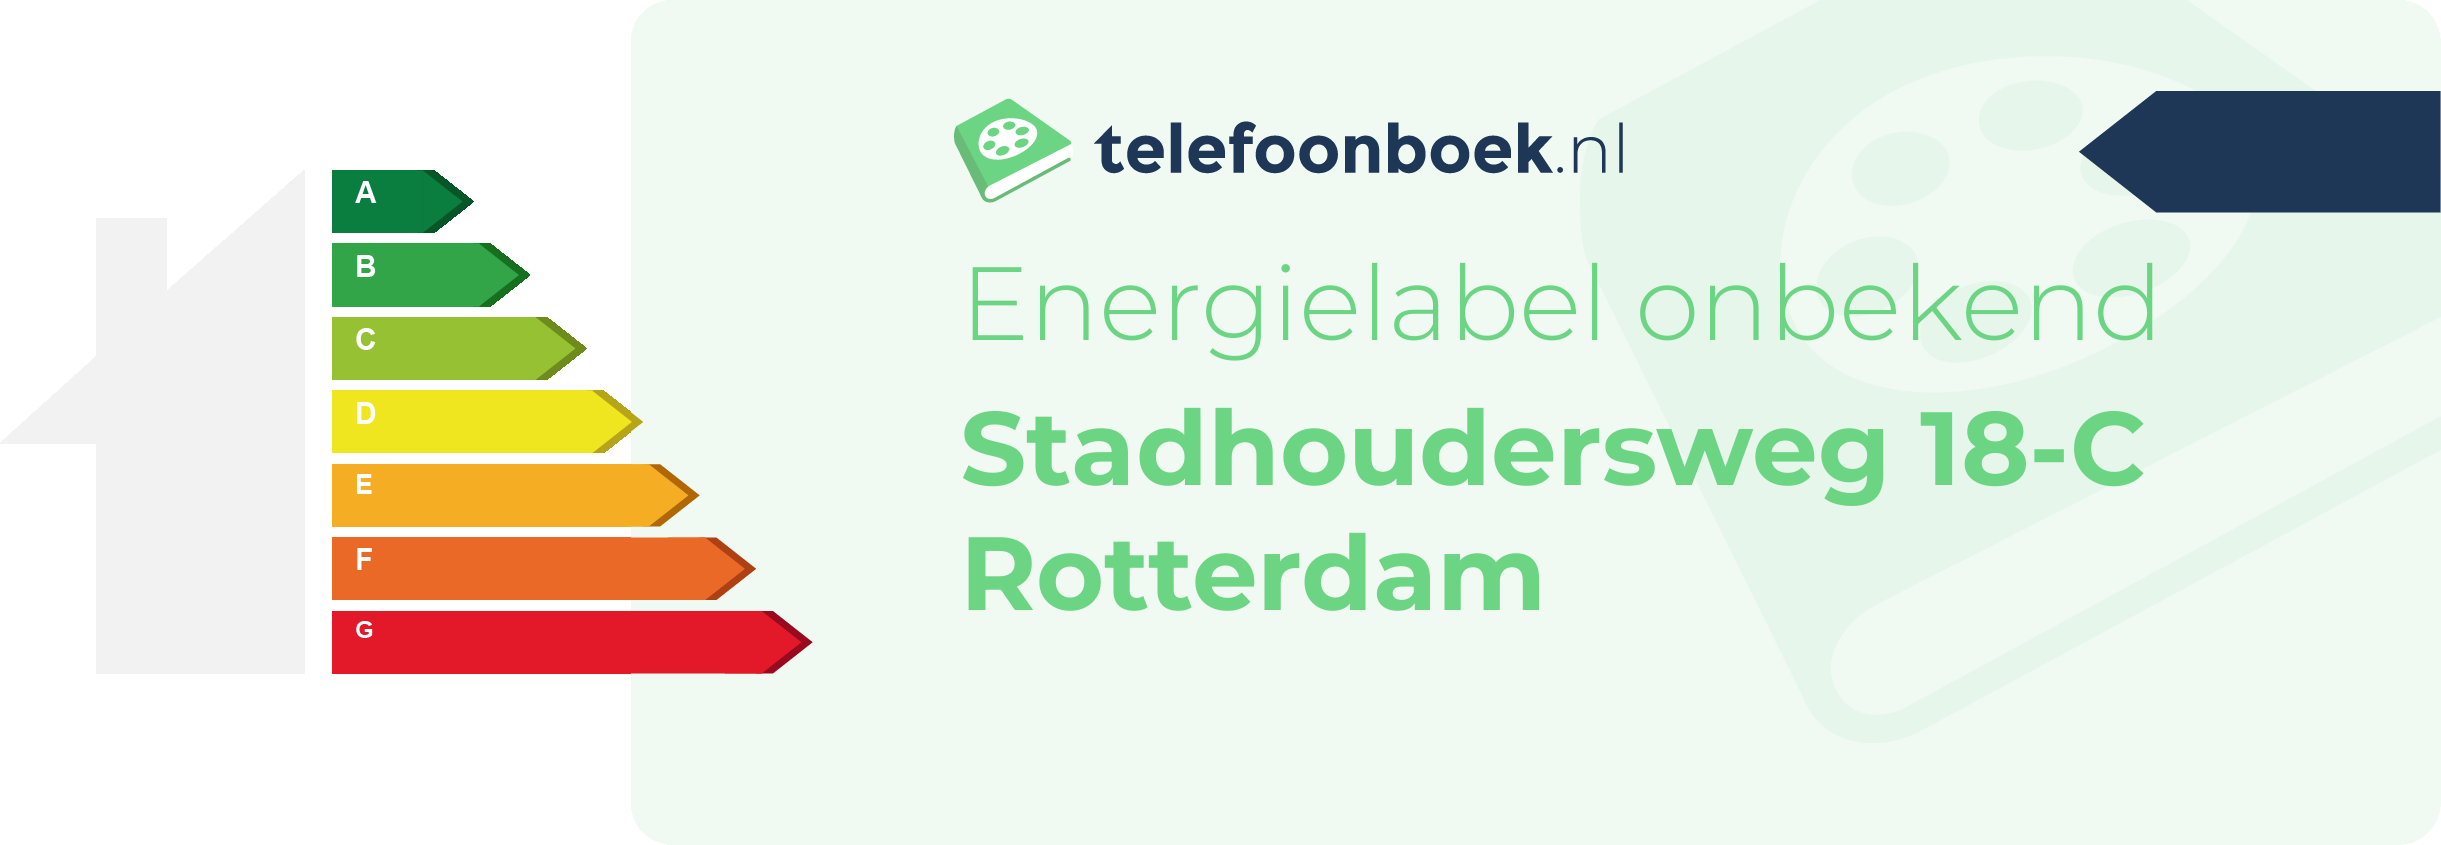 Energielabel Stadhoudersweg 18-C Rotterdam